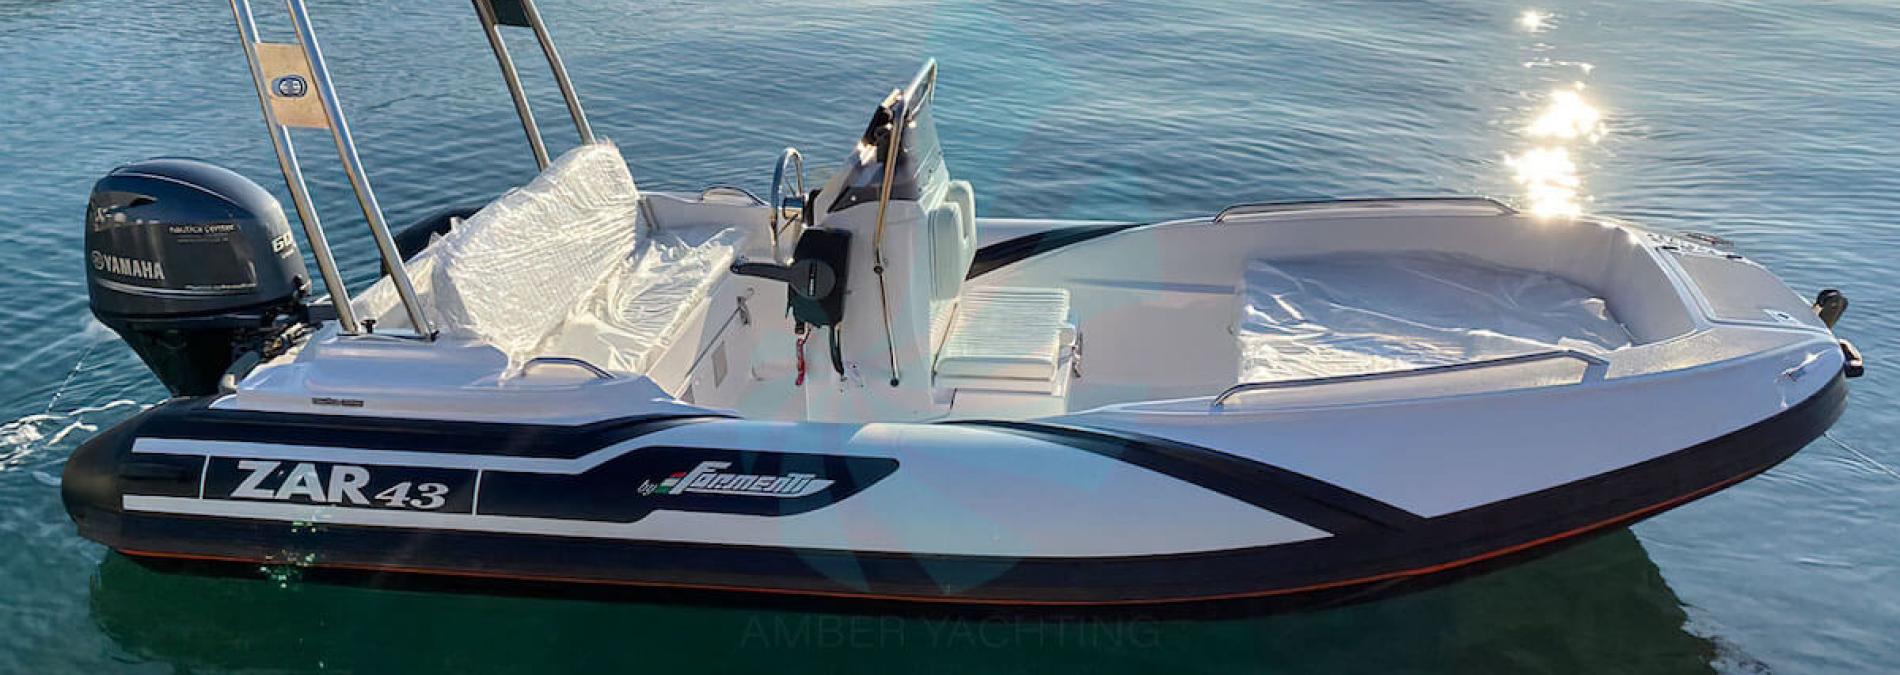 ZAR 43 new Rib boat